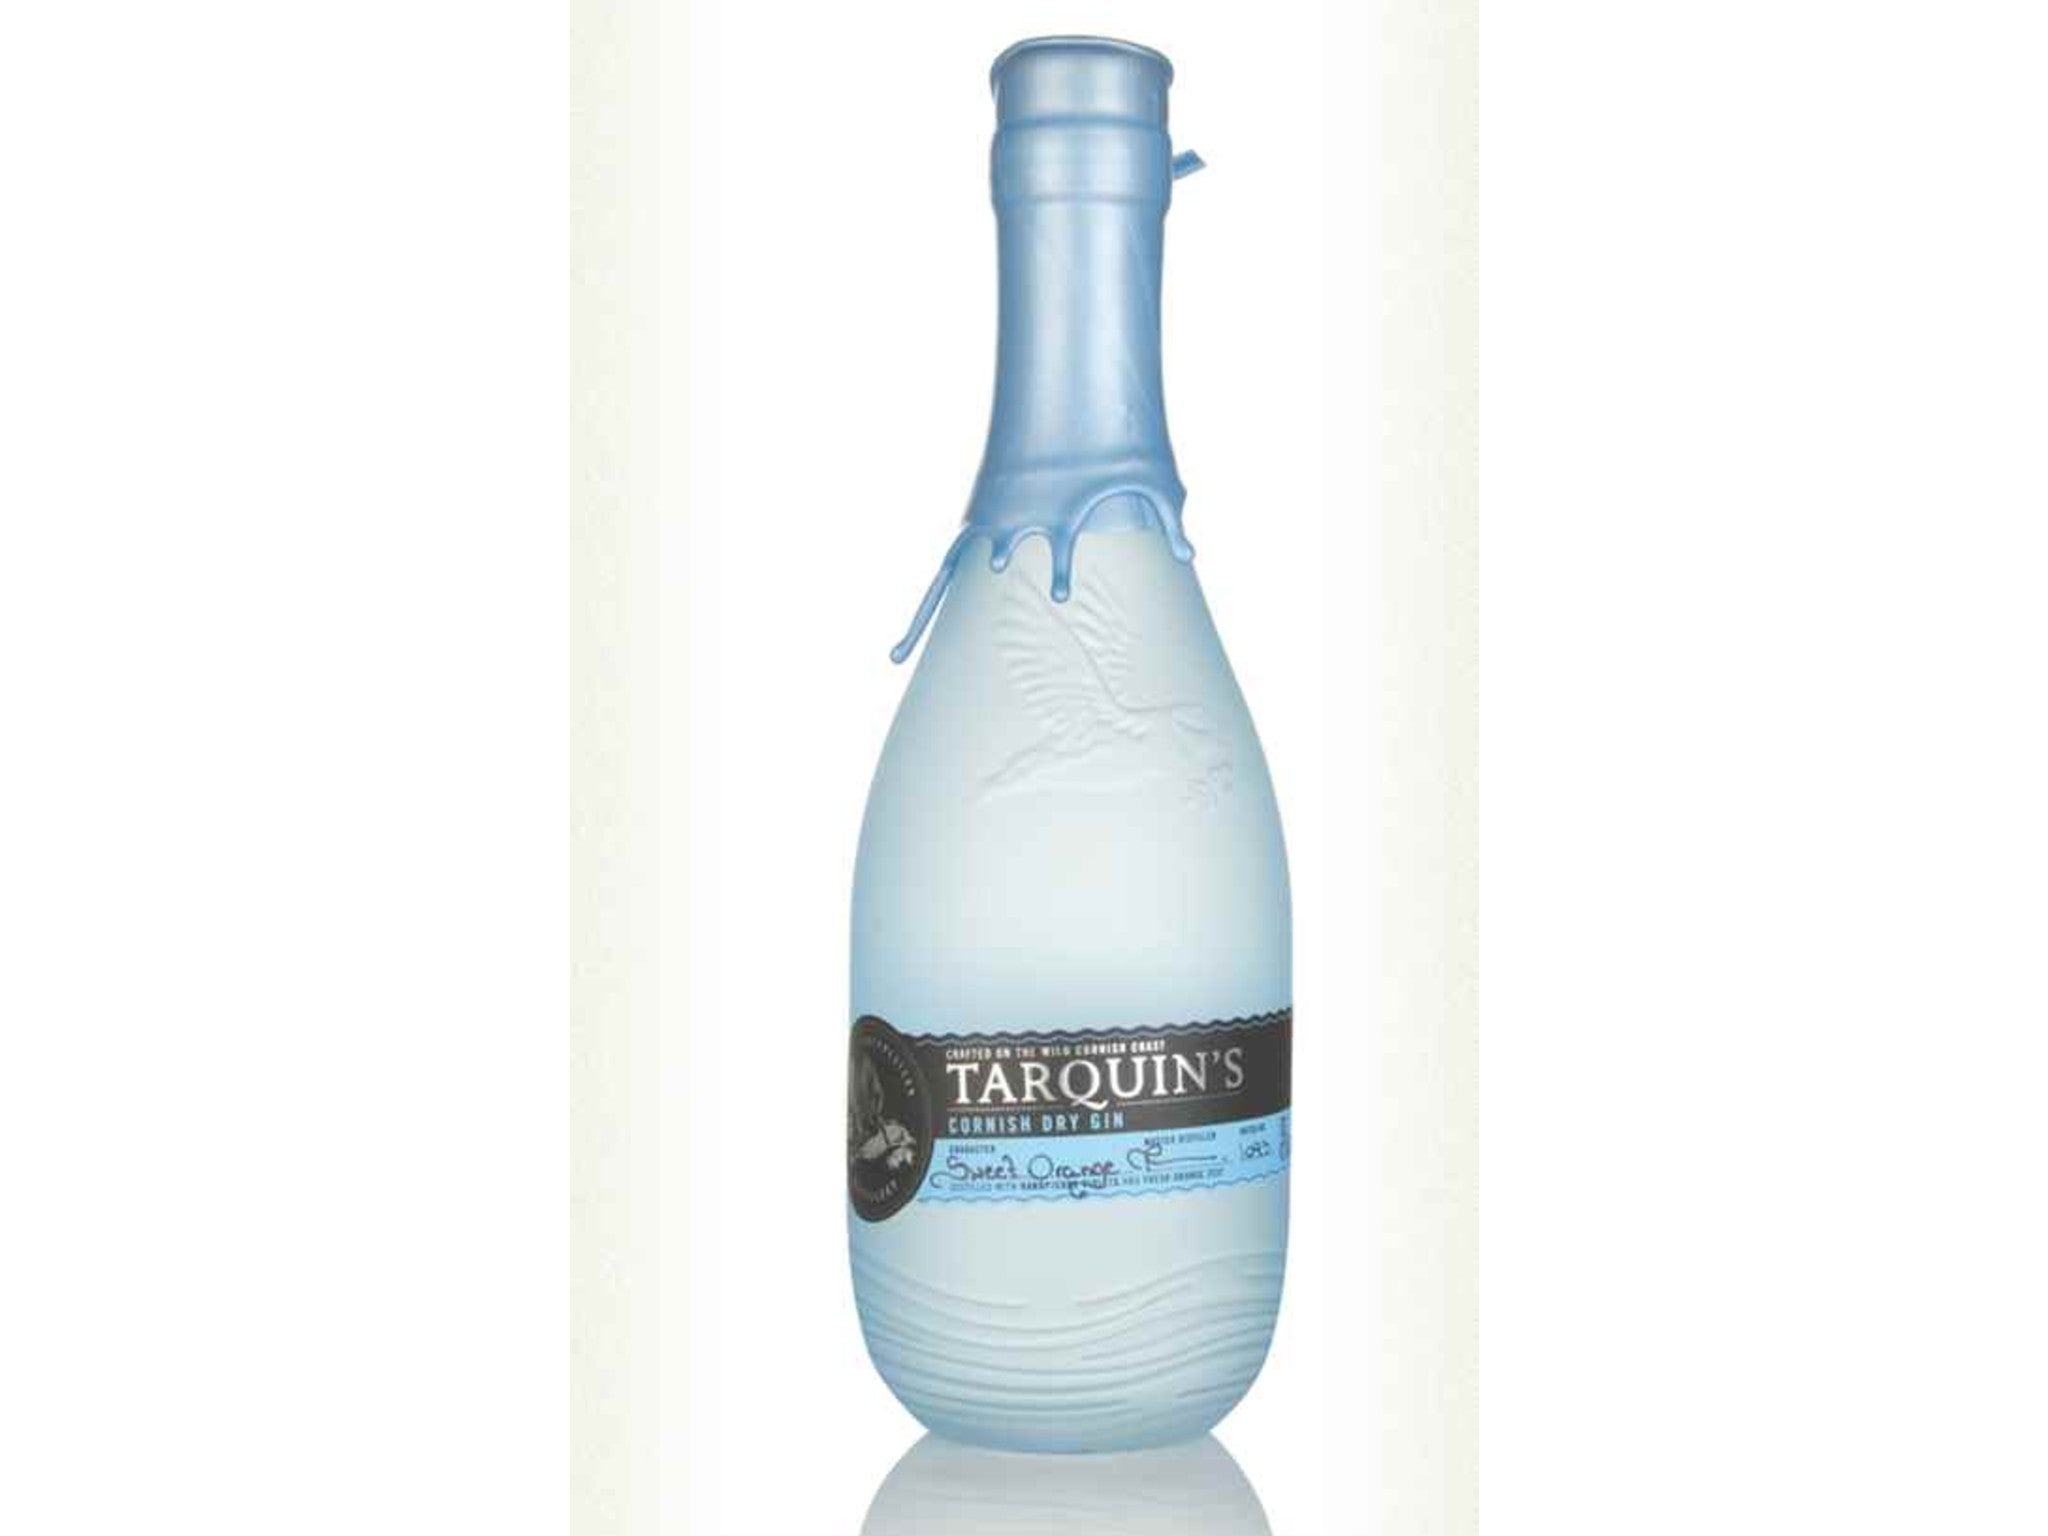 Tarquin’s cornish dry gin indybest.jpeg